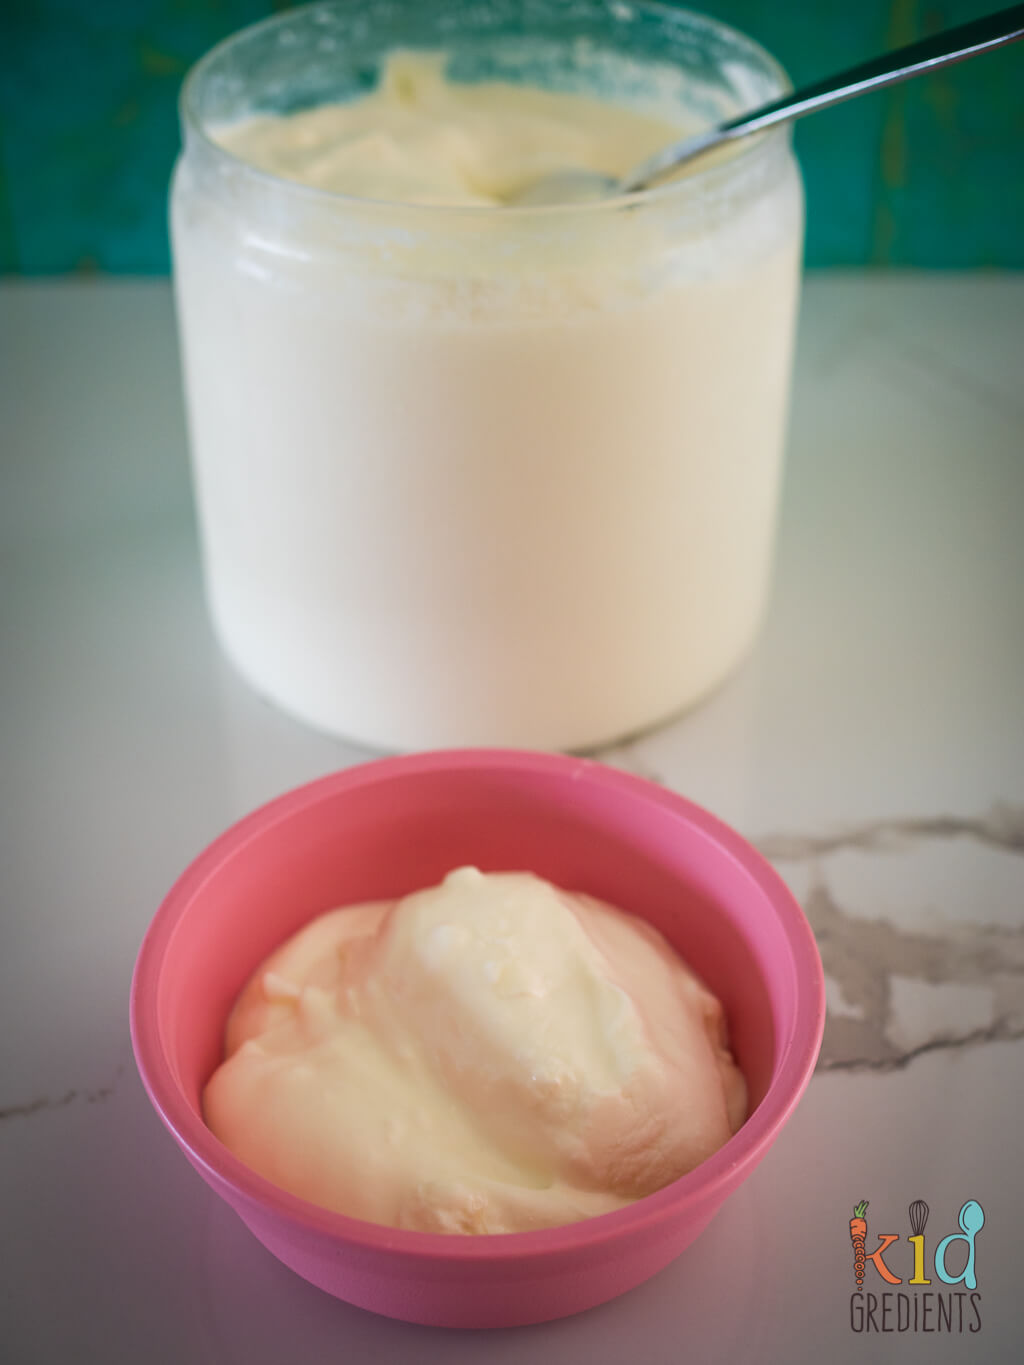 https://kidgredients.com.au/wp-content/uploads/2020/11/diy-yoghurt-vertical-4.jpg